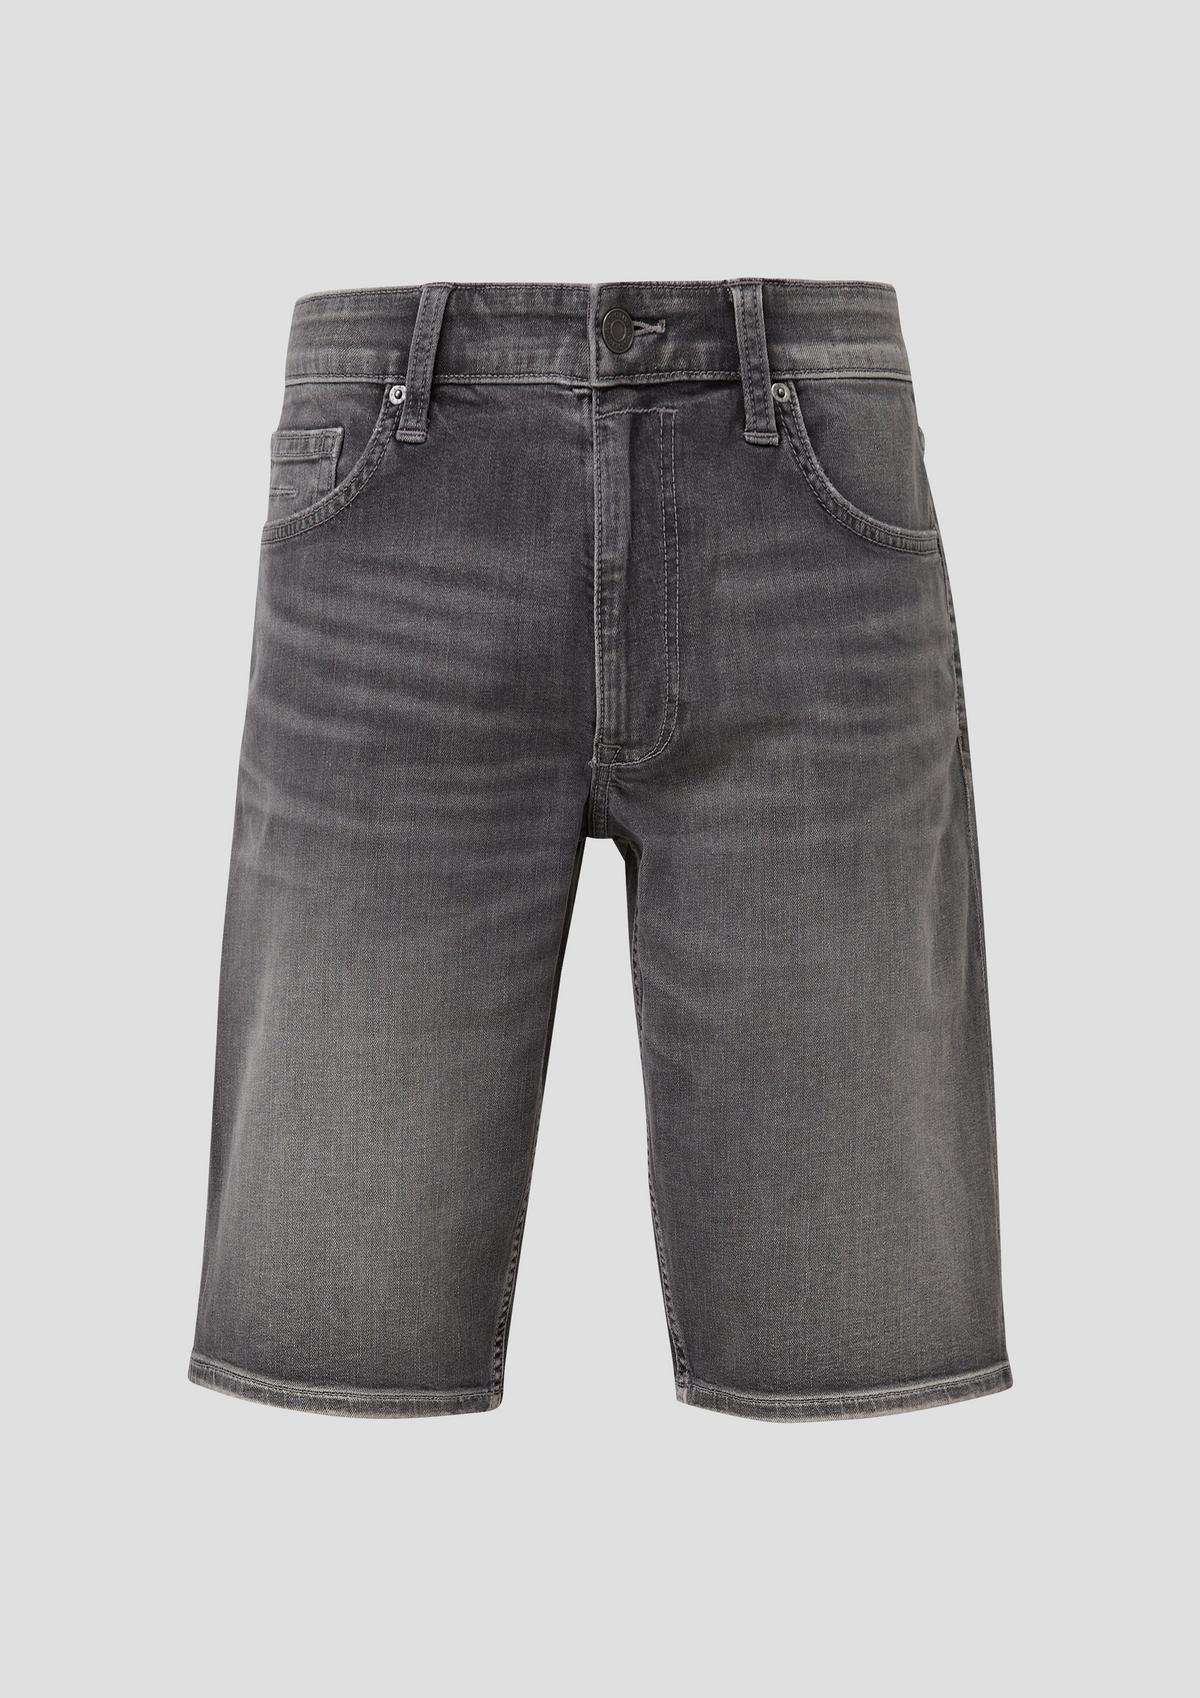 s.Oliver Jeans-Shorts / Regular Fit / Mid Rise / Slim Leg